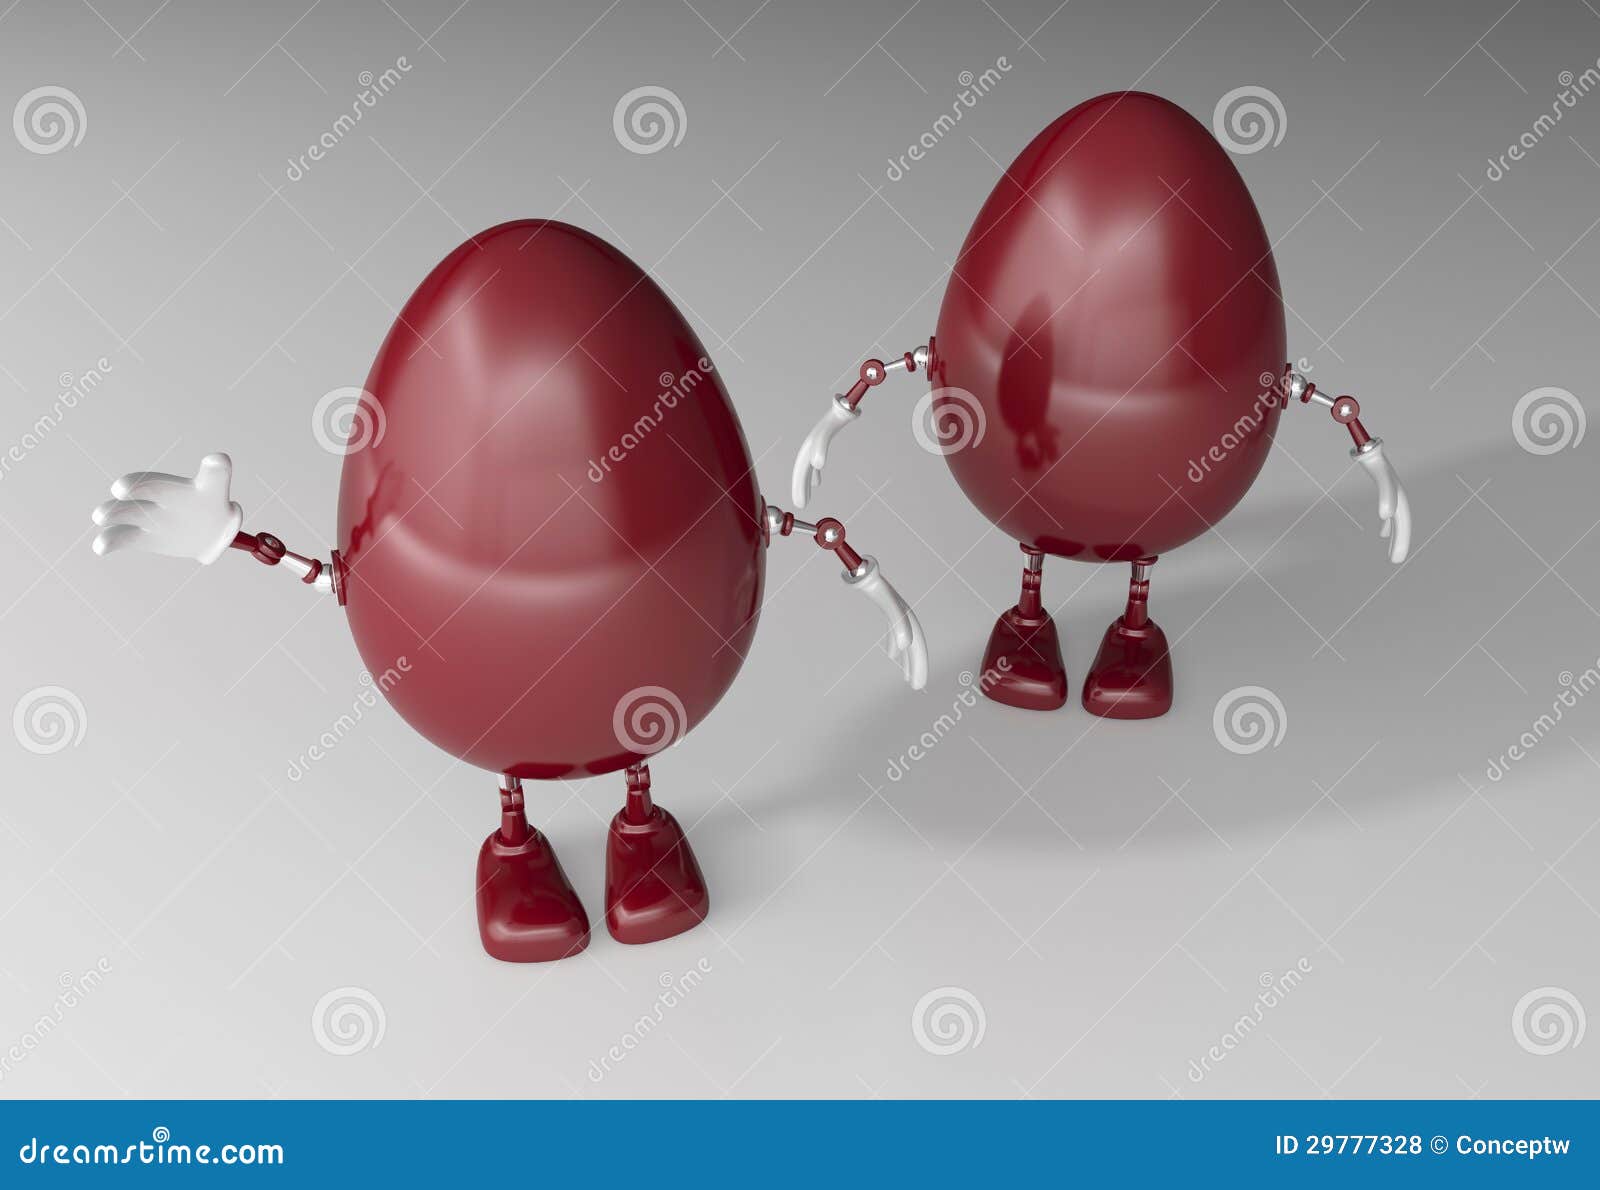 robo easter eggs